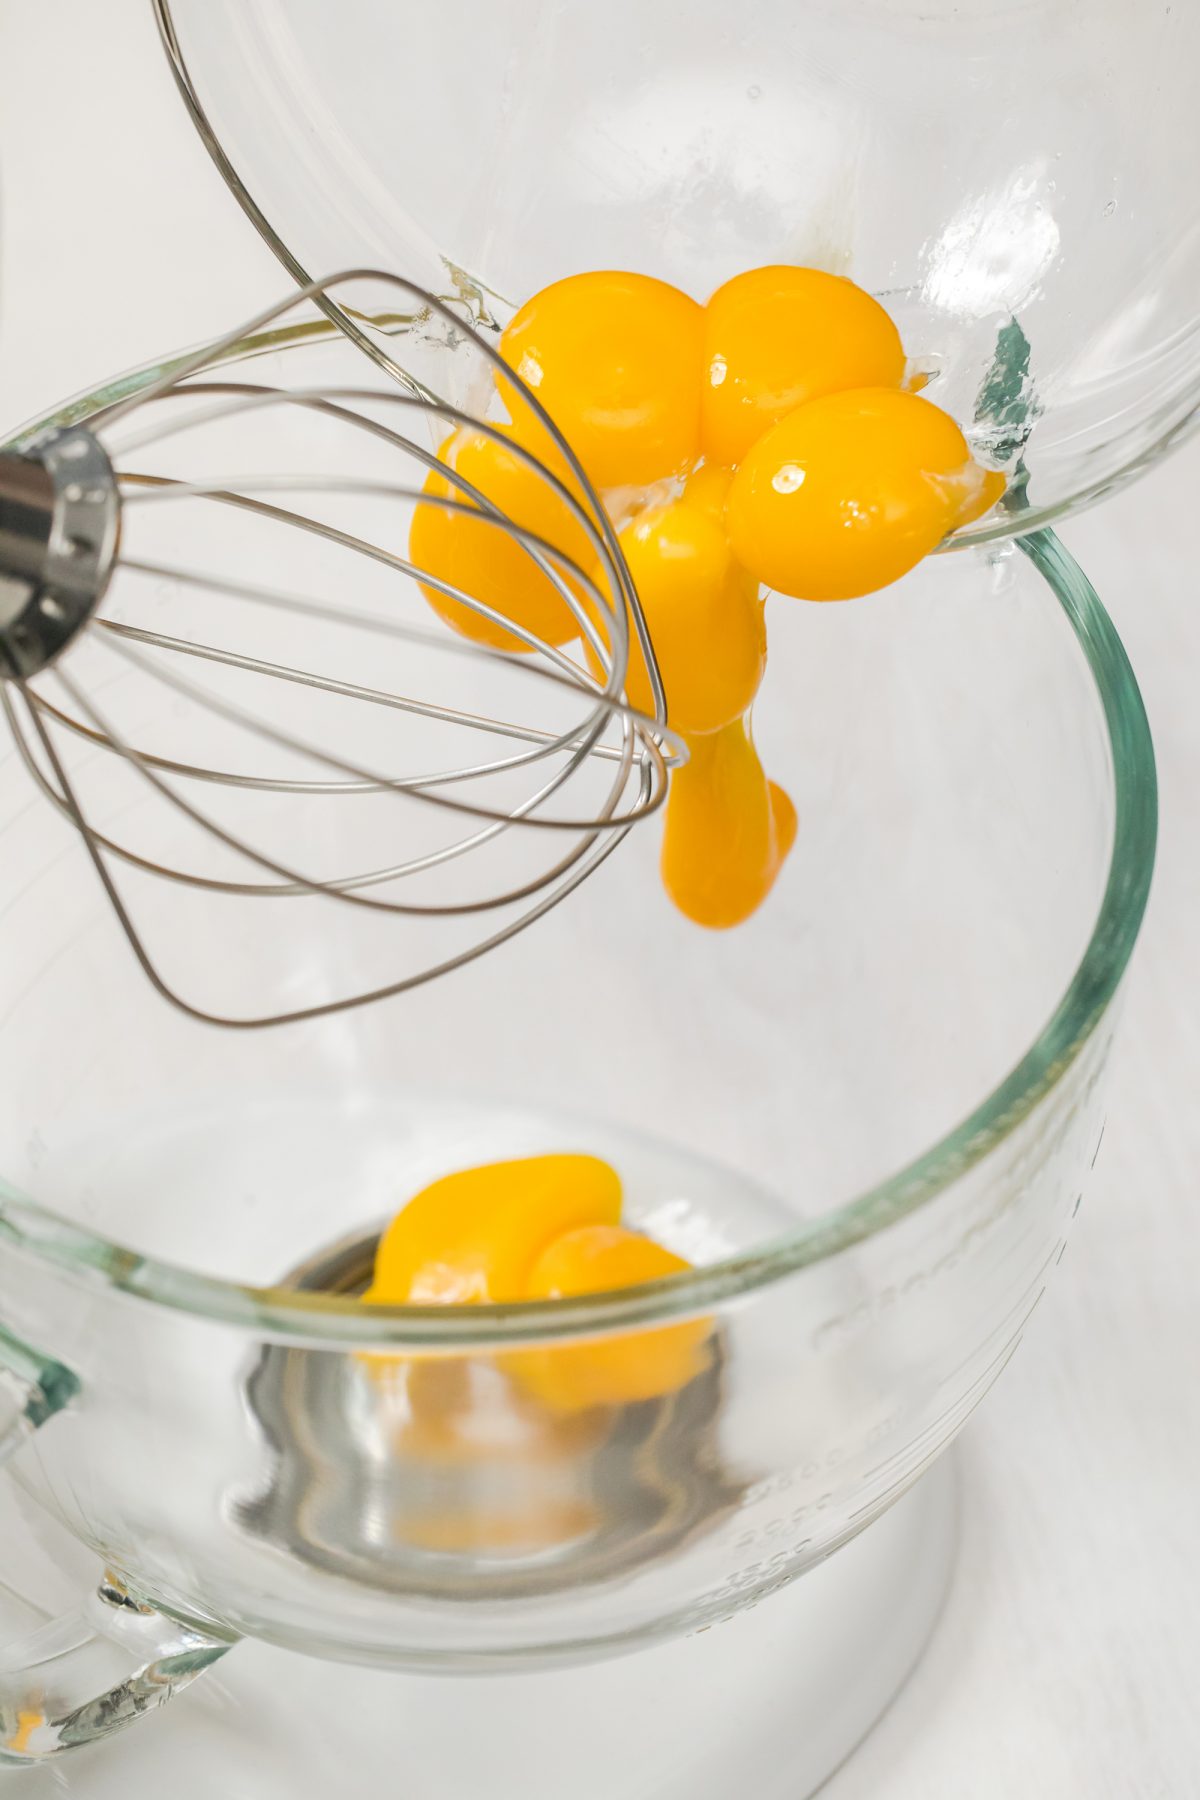 Adding egg yolks to the eggnog